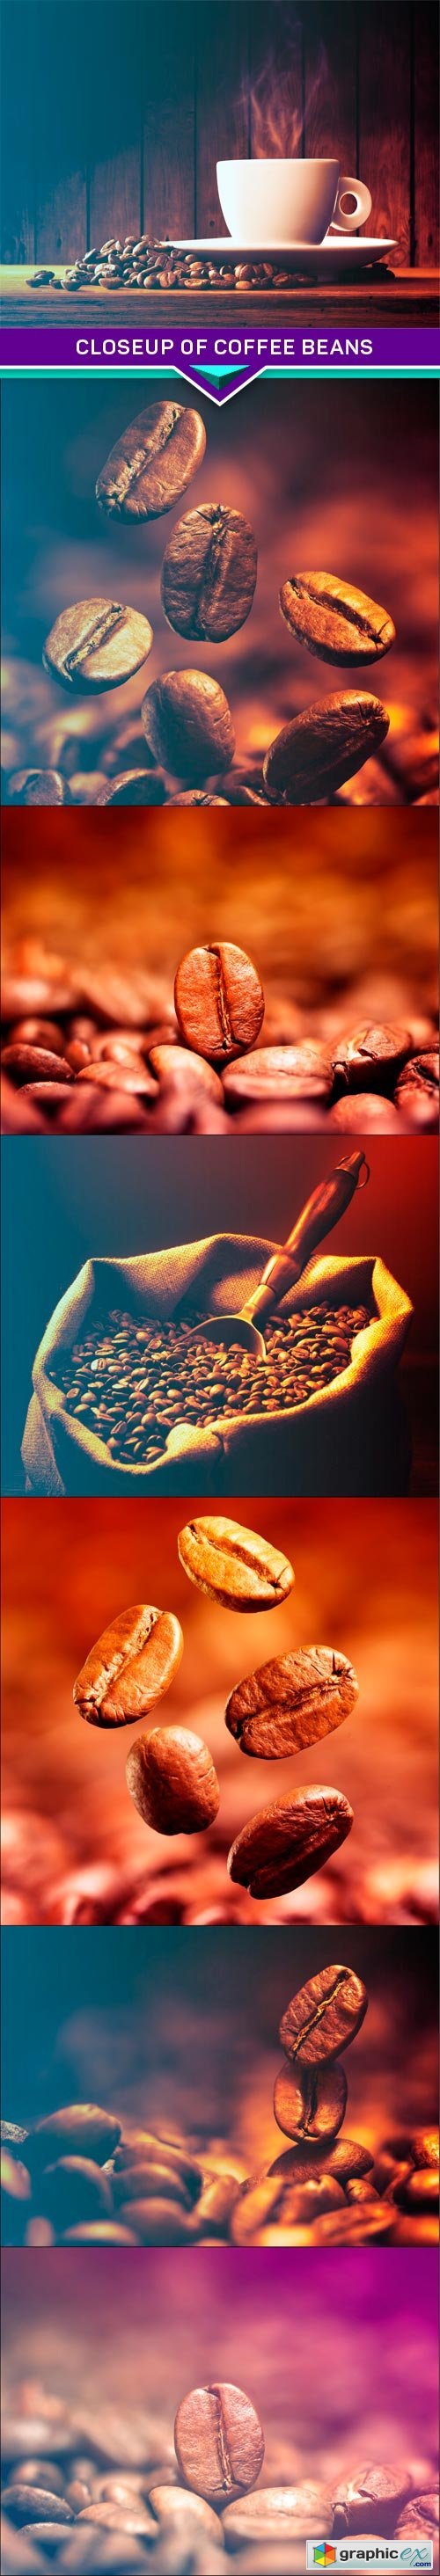 Closeup of coffee beans 7x JPEG